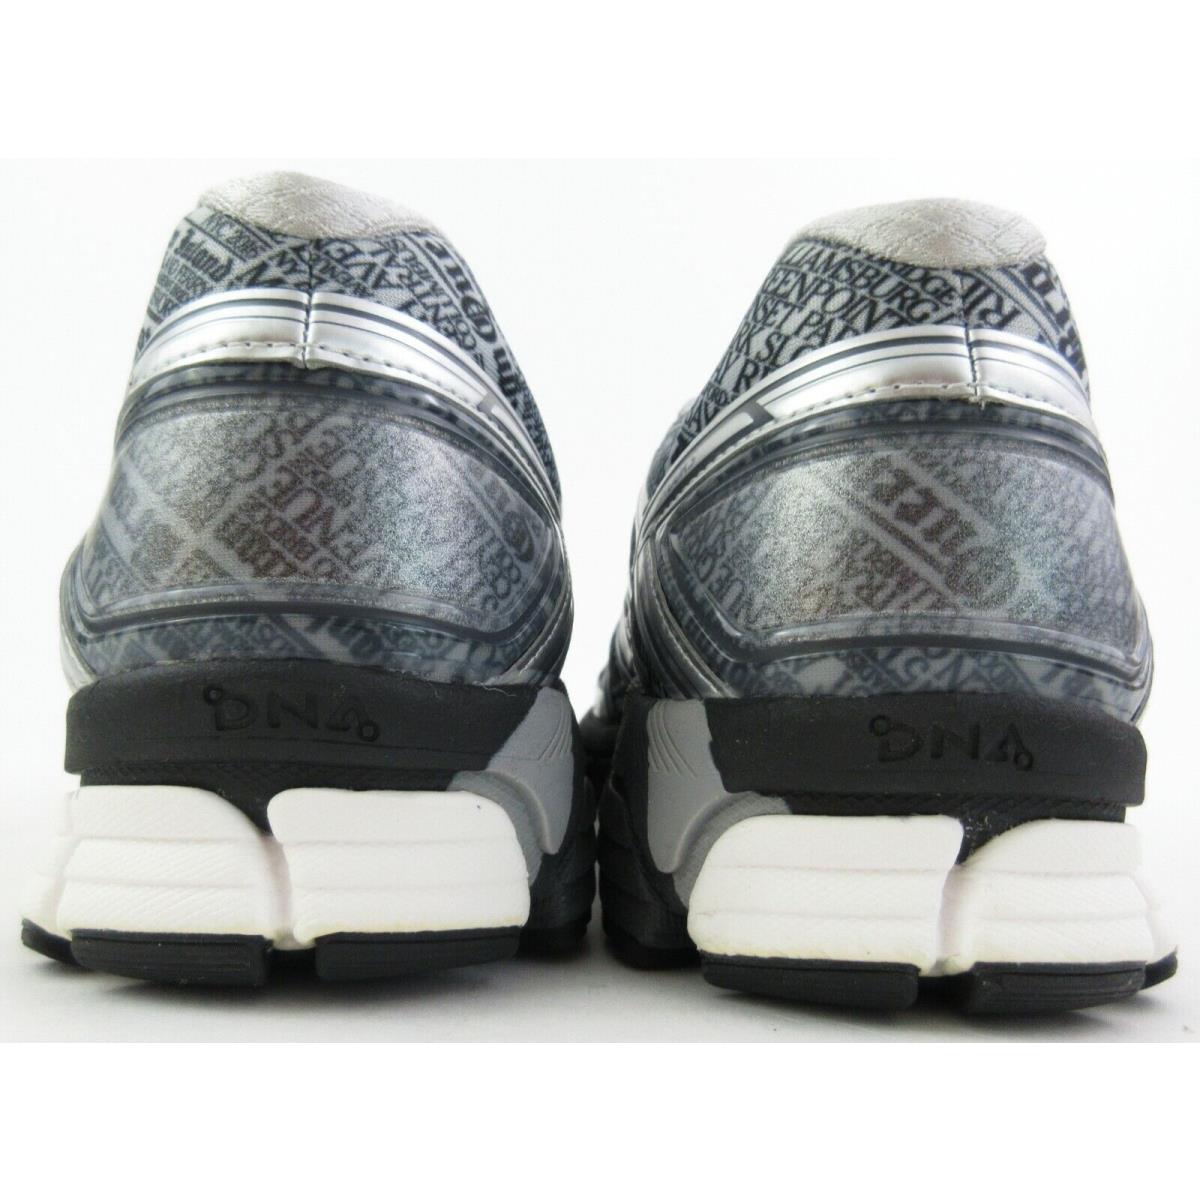 Brooks shoes Adrenaline GTS - Gray/Black/Silver 9